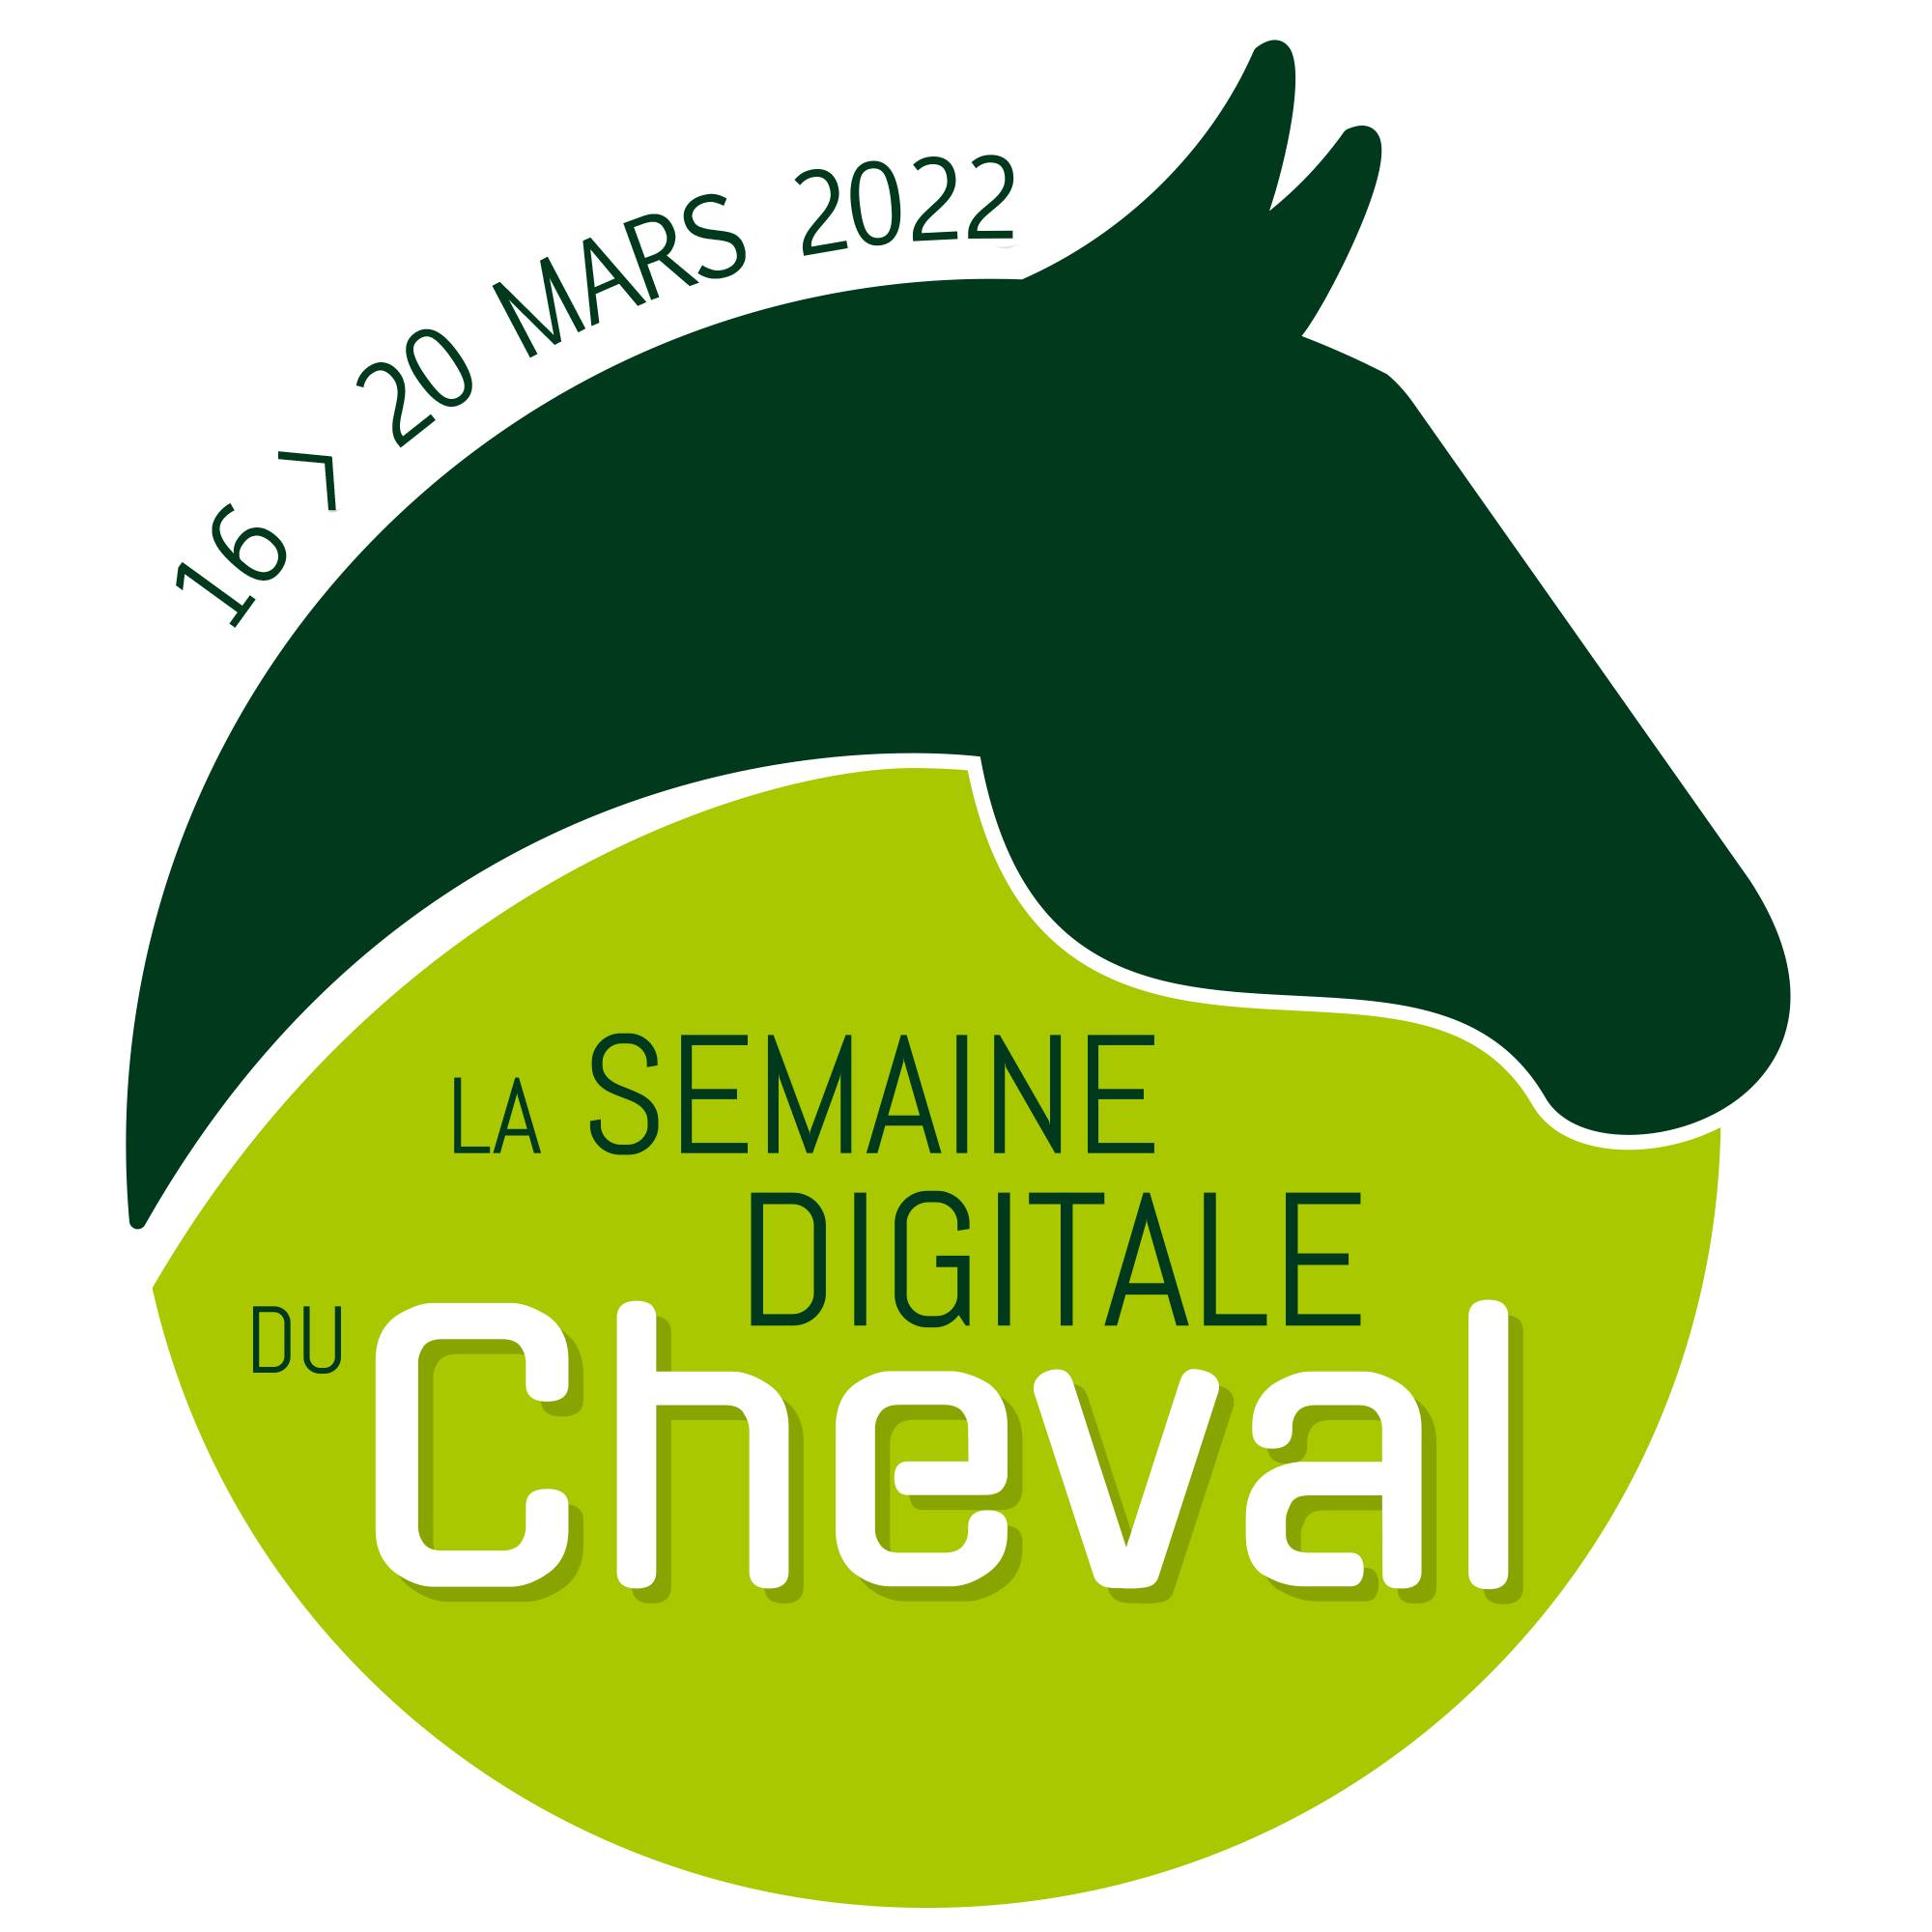 Semaine Digitale du Cheval : du 16 au 20 mars 2022